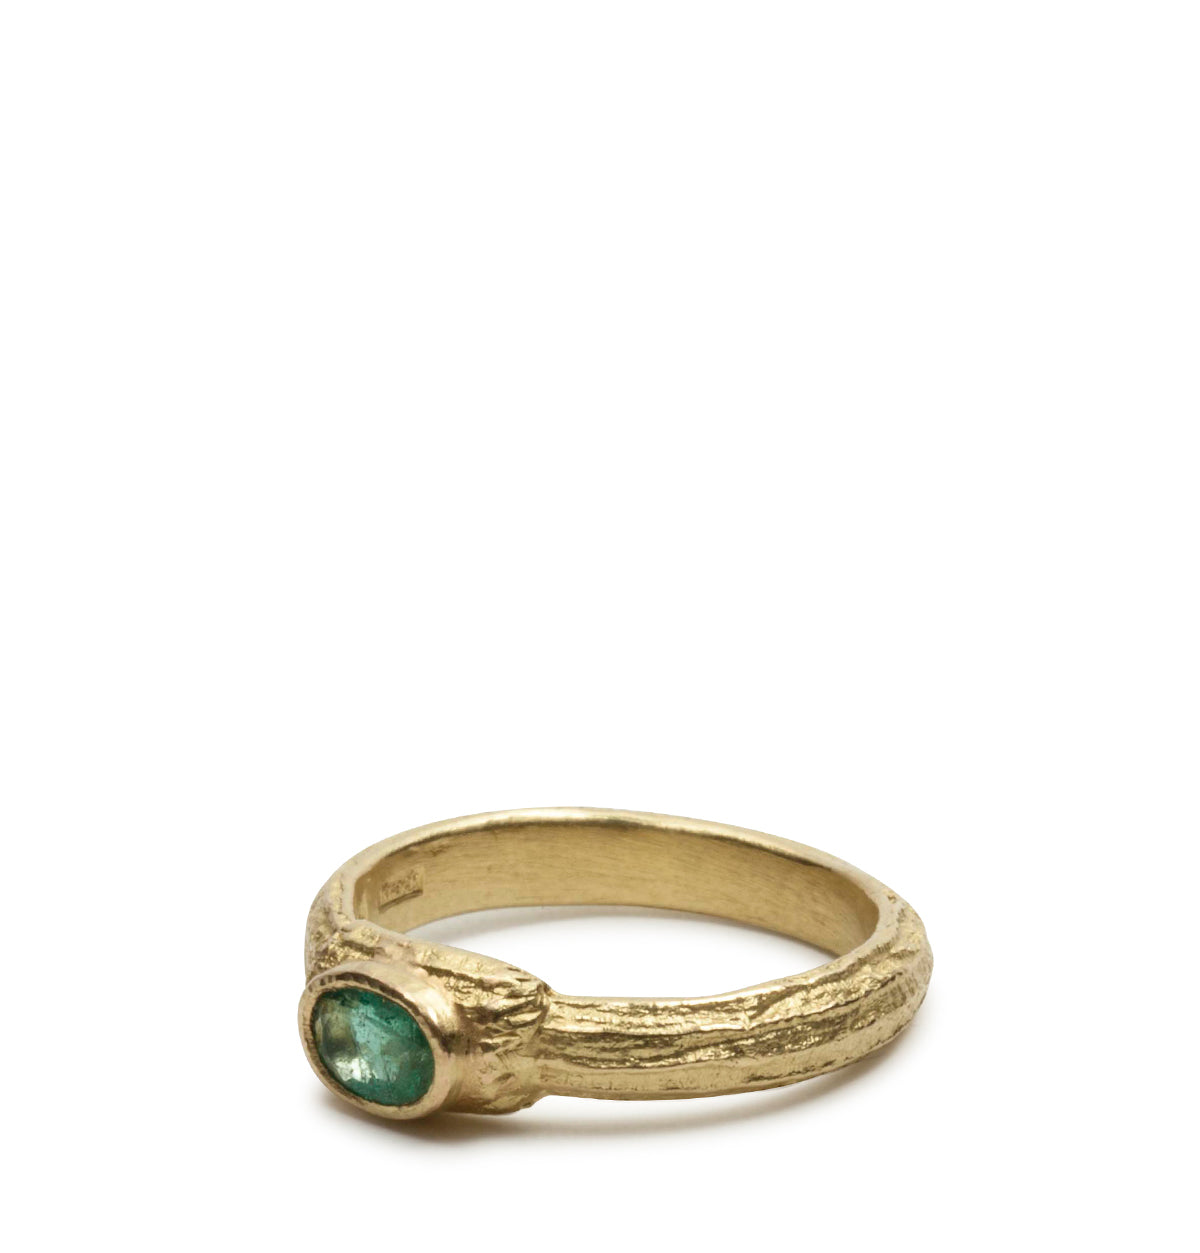 Zierlicher 750 Goldring mit ovalem grünem Smaragd